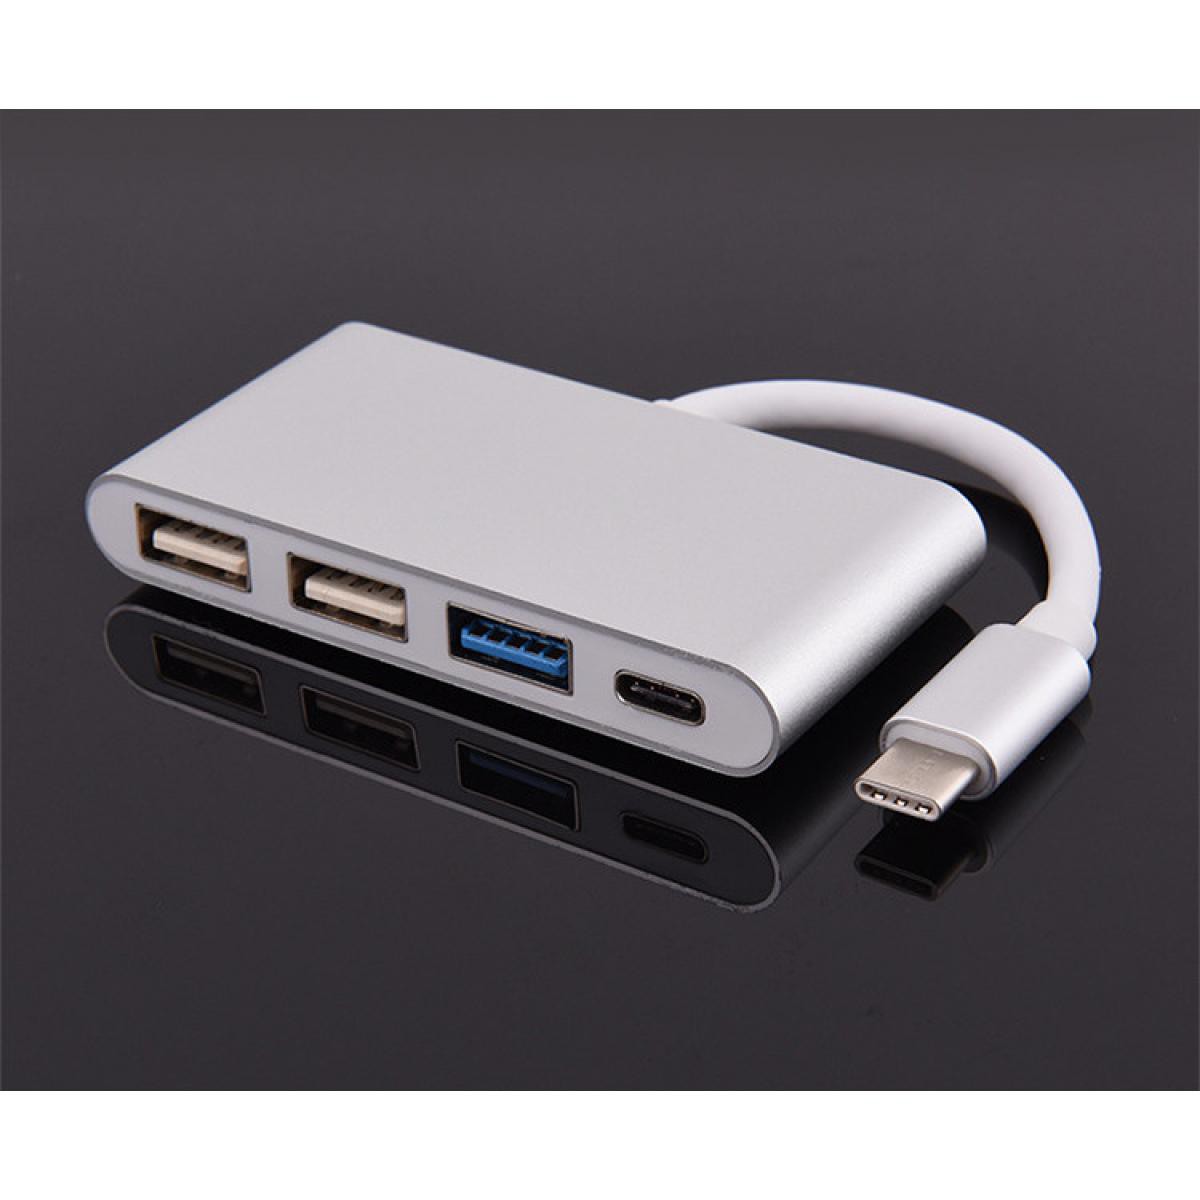 Shot - Multi Adaptateur 4 en 1 Type C pour XIAOMI Mi A3 Smartphone Hub 2 ports USB 2.0 1 Port USB 3.0 (ARGENT) - Hub